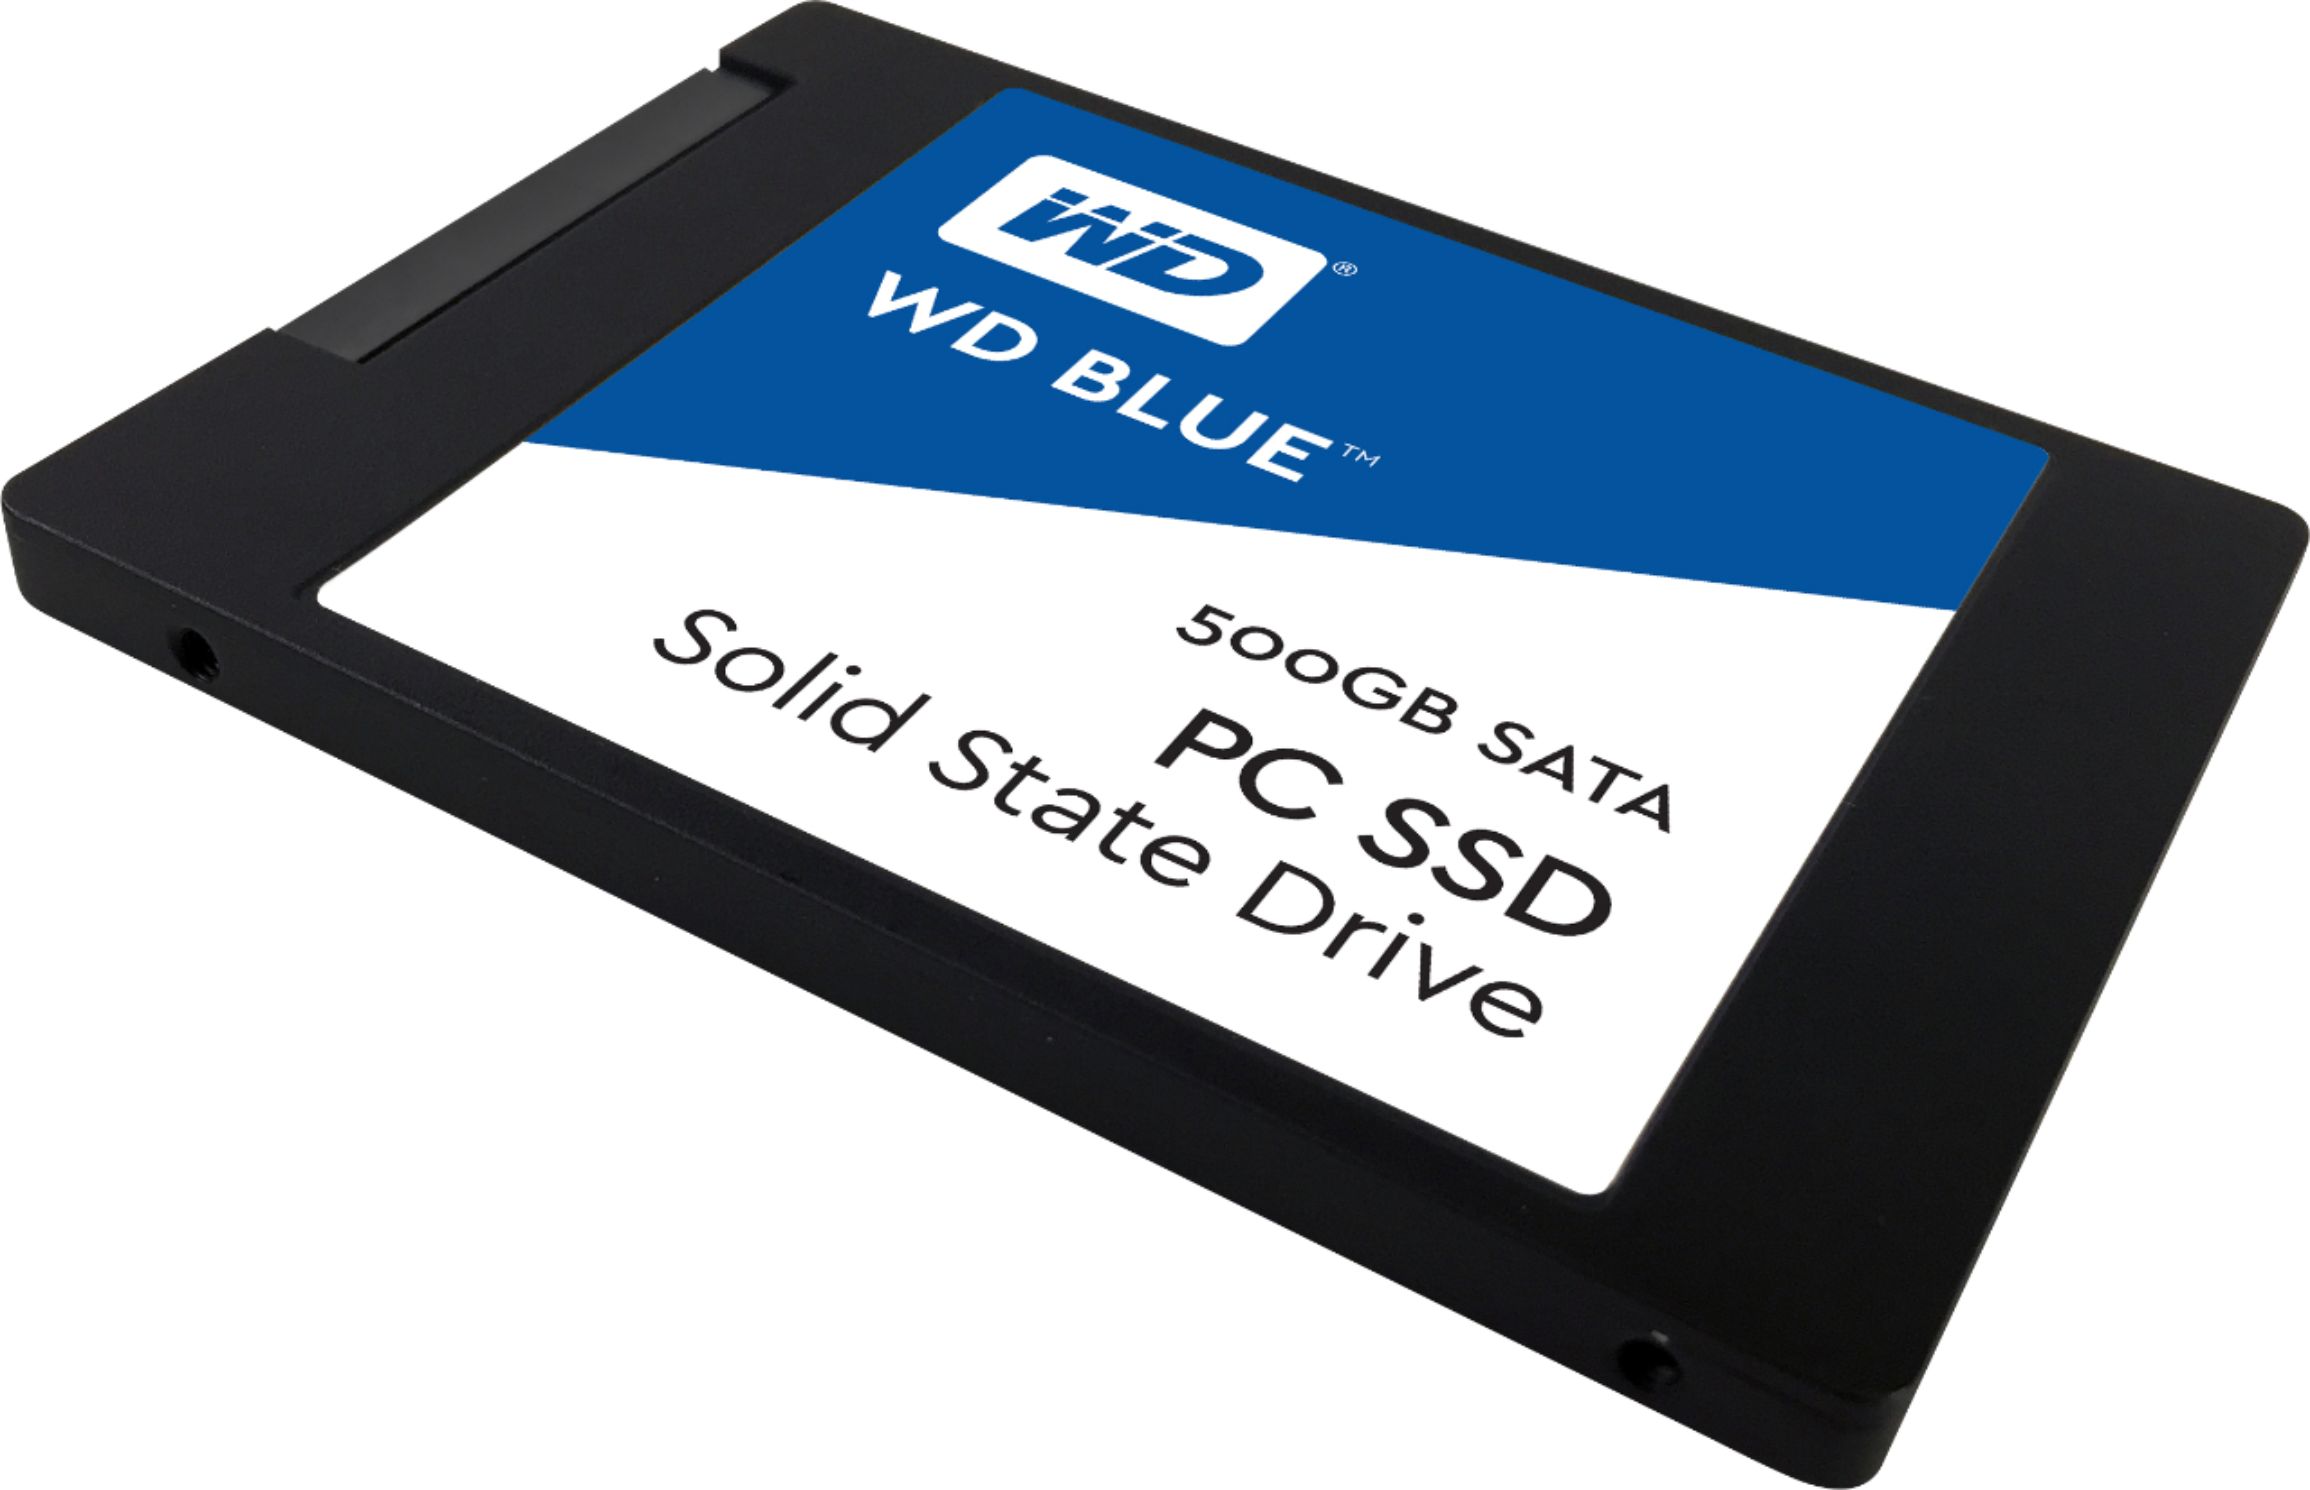 WD Blue PC SSD WDBNCE5000PNC - SSD - 500 GB - SATA 6Gb/s